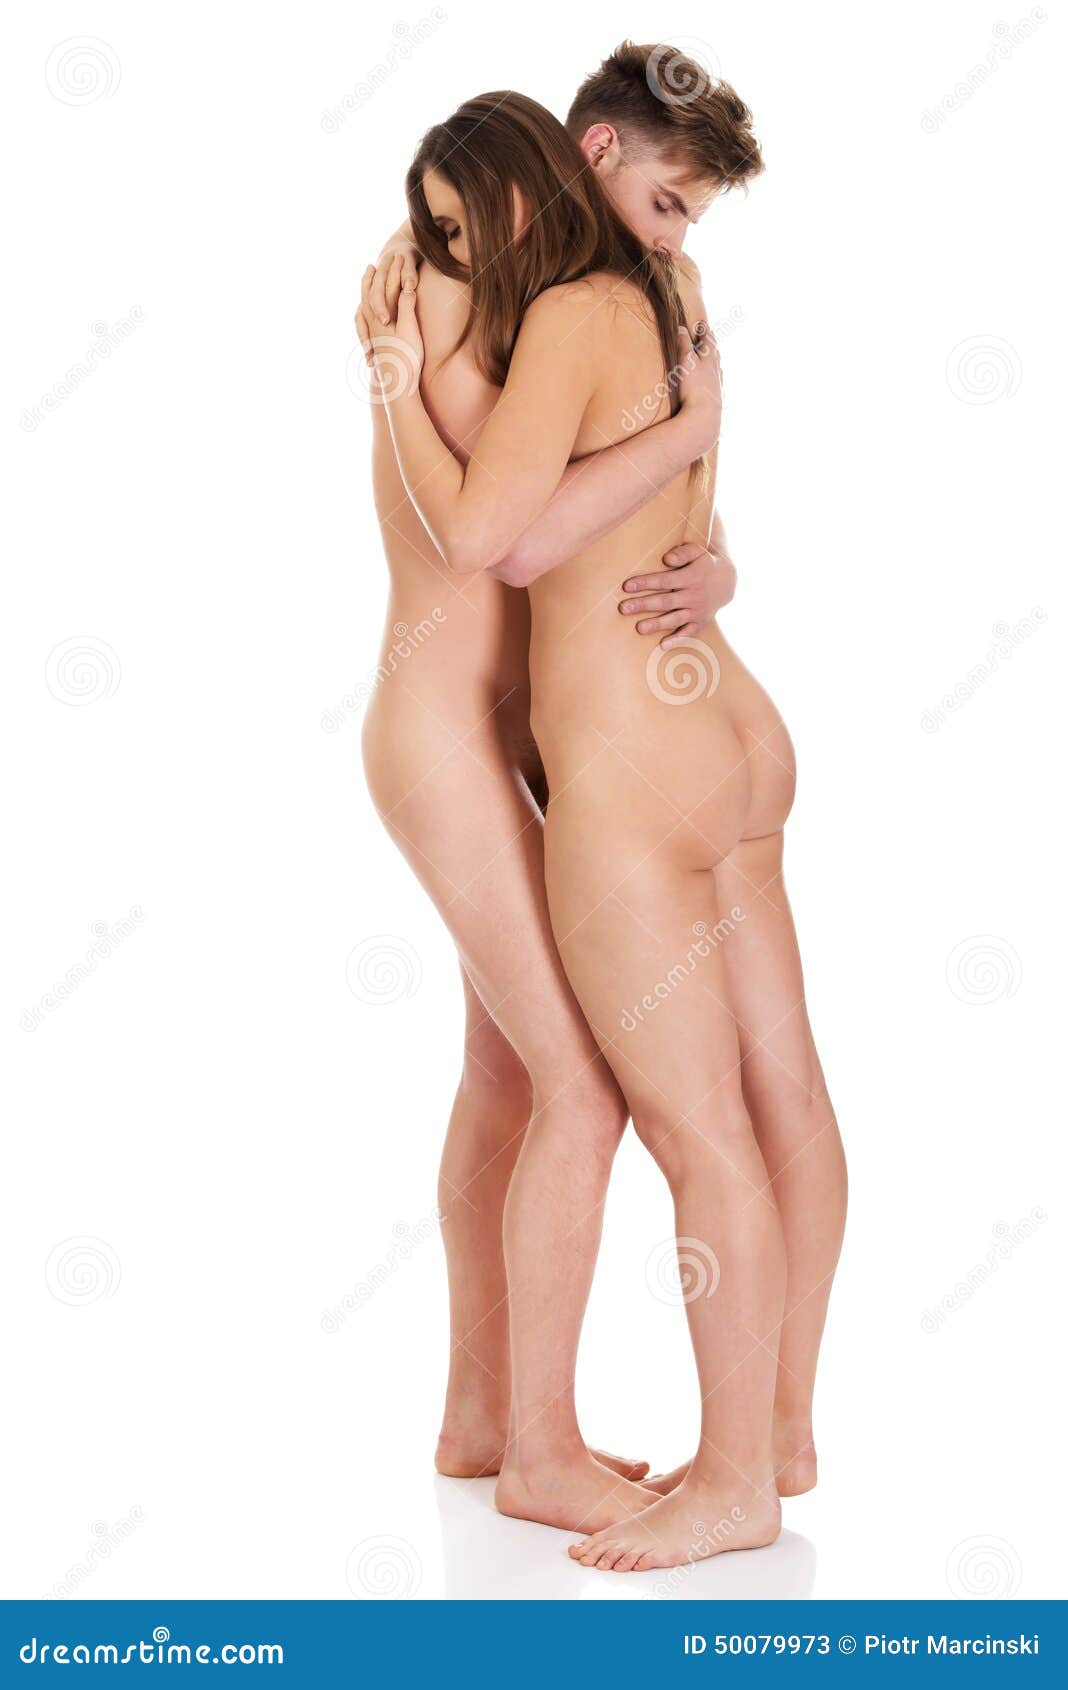 [Image: beautiful-naked-couple-tender-embrace-love-50079973.jpg]